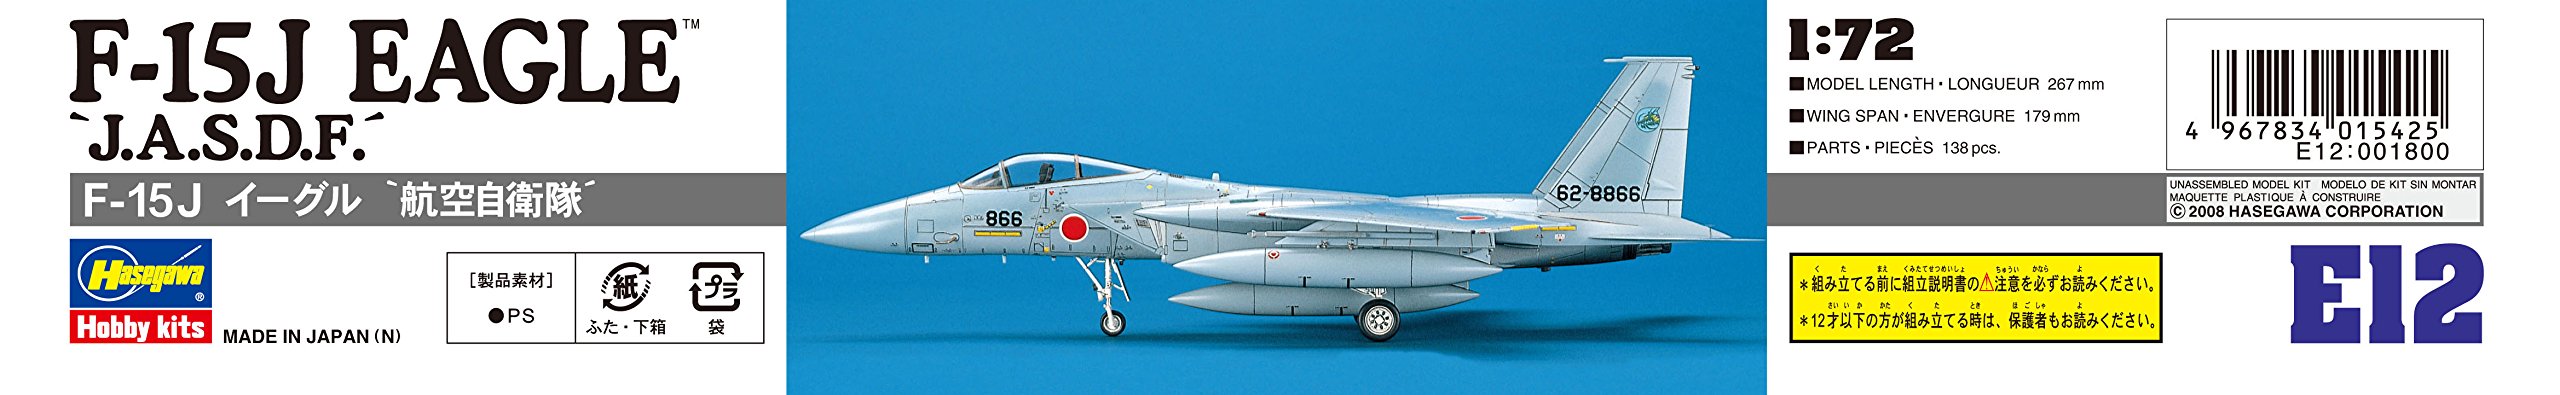 HASEGAWA 1/72 F-15J Eagle 'J.A.S.D.F.' J.A.S.D.F. Interceptor Plastic Model